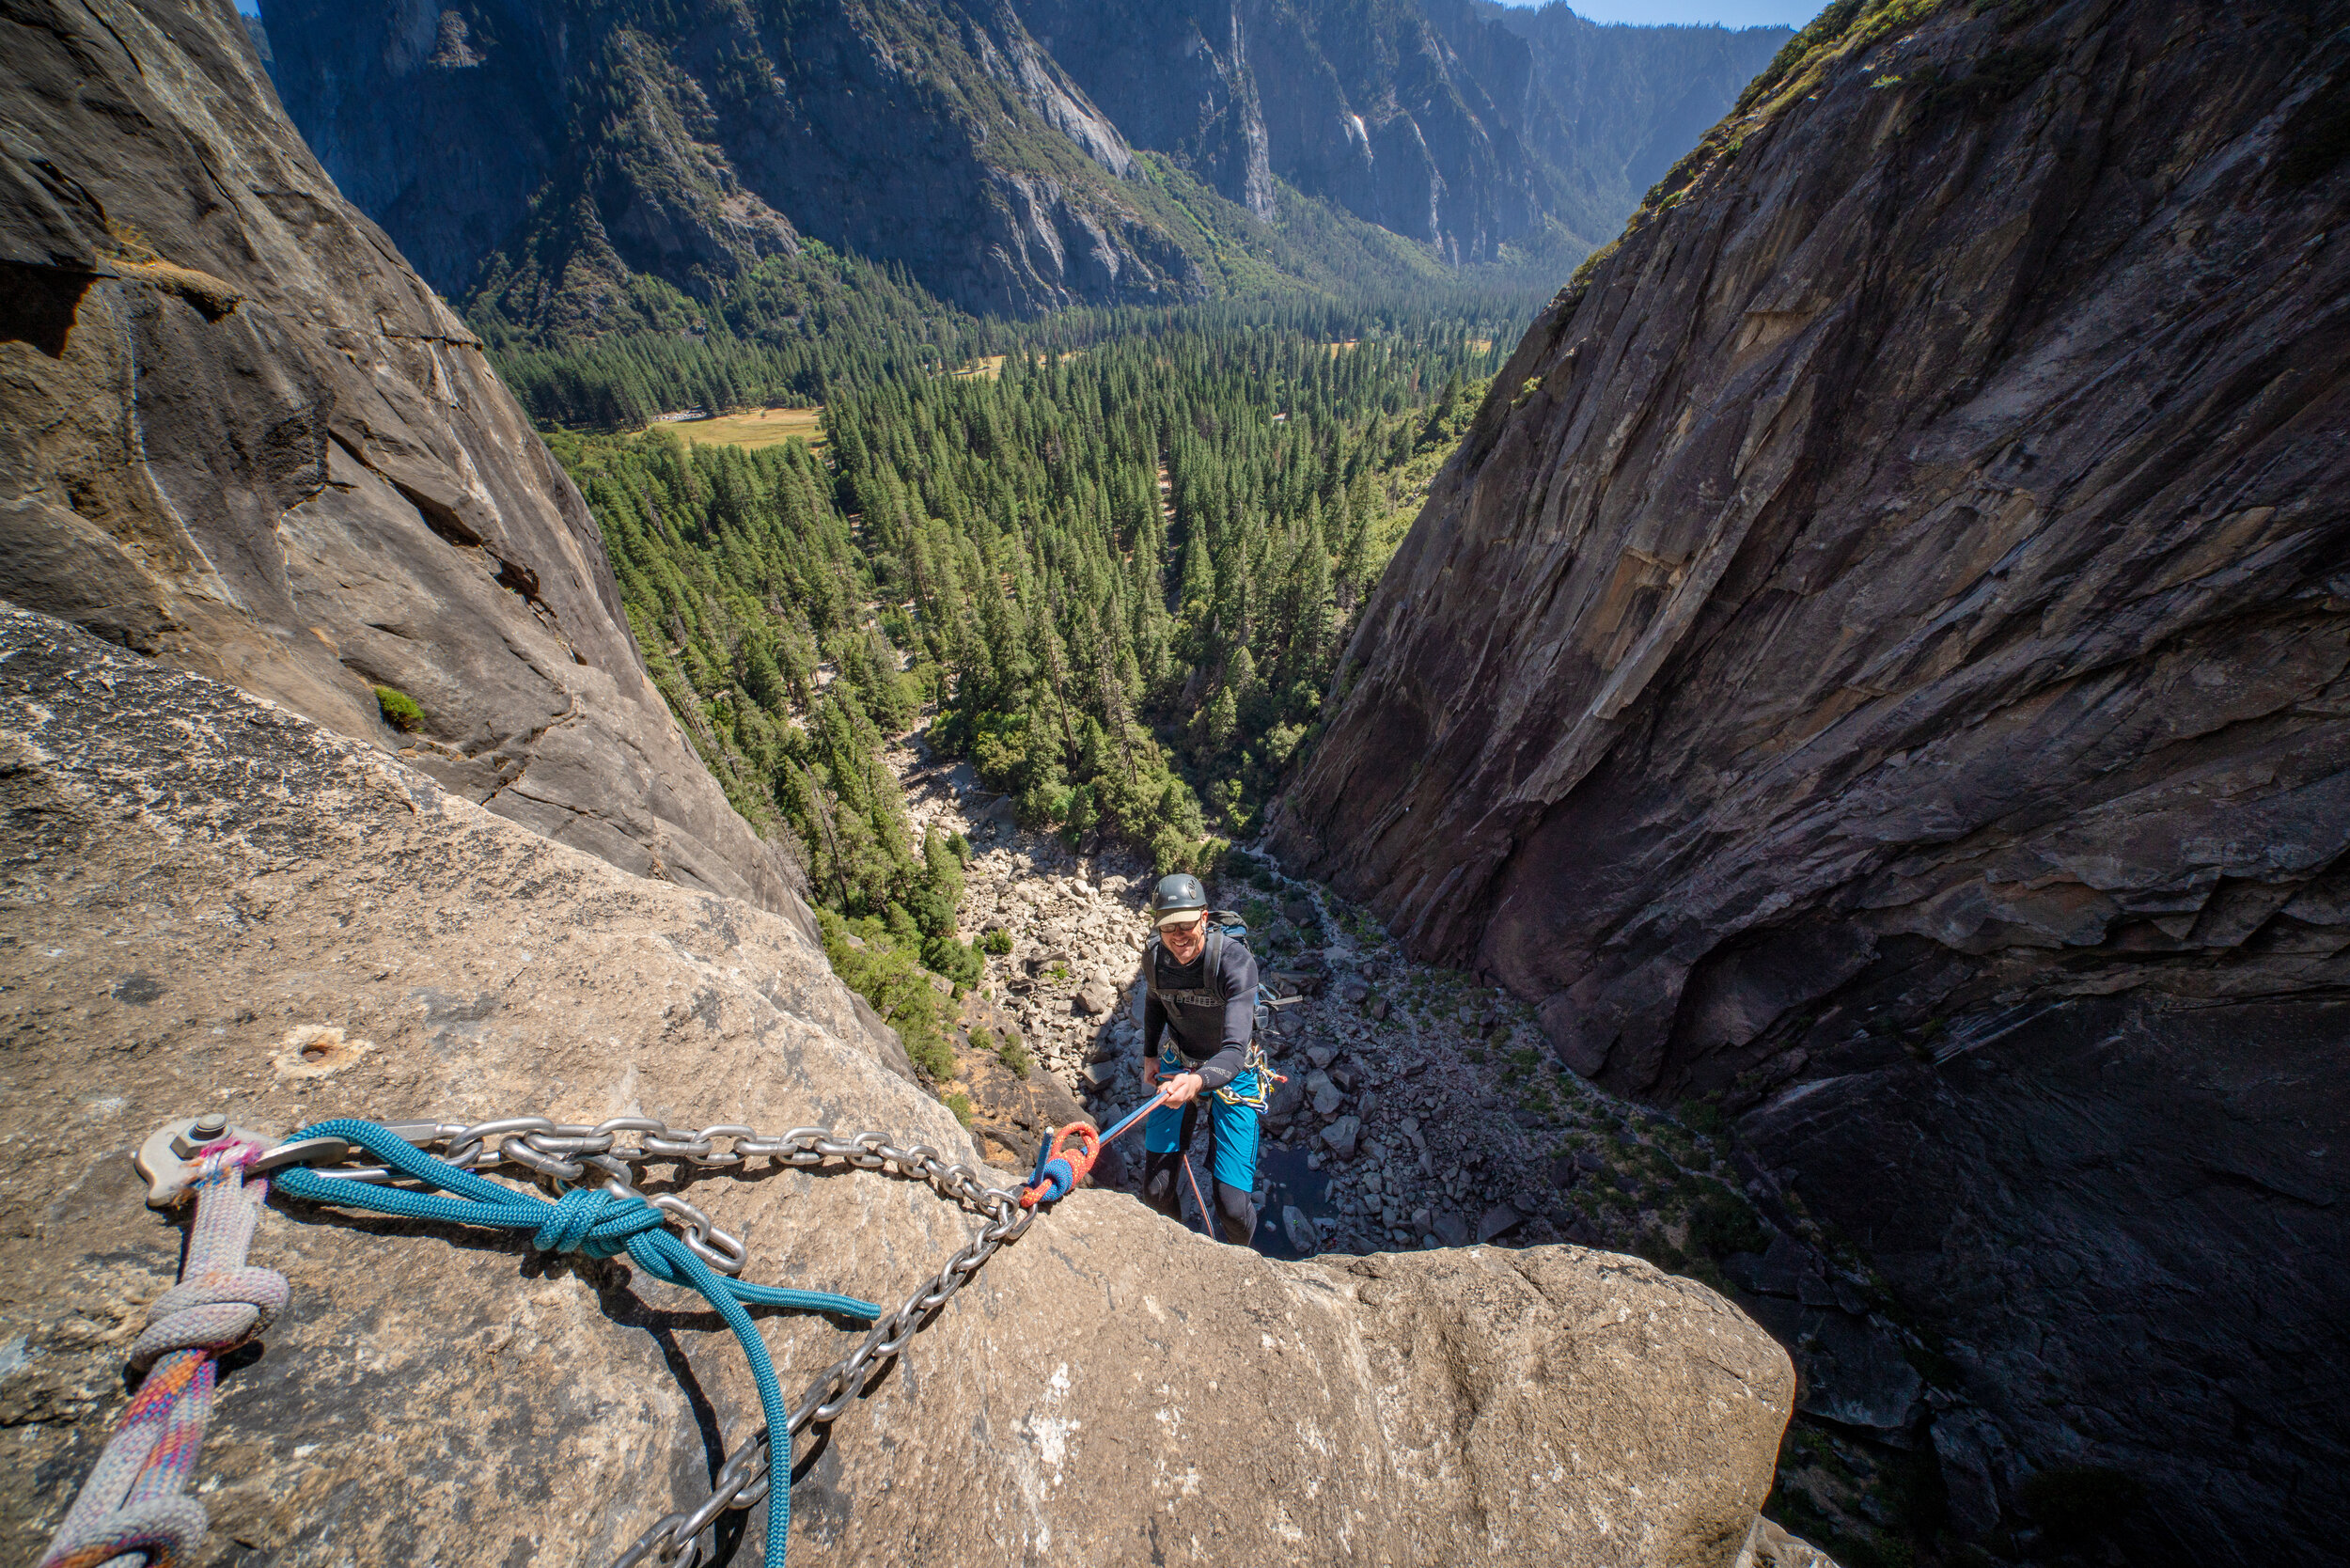  Markus descends the 350 foot face of Lower Yosemite Falls. 